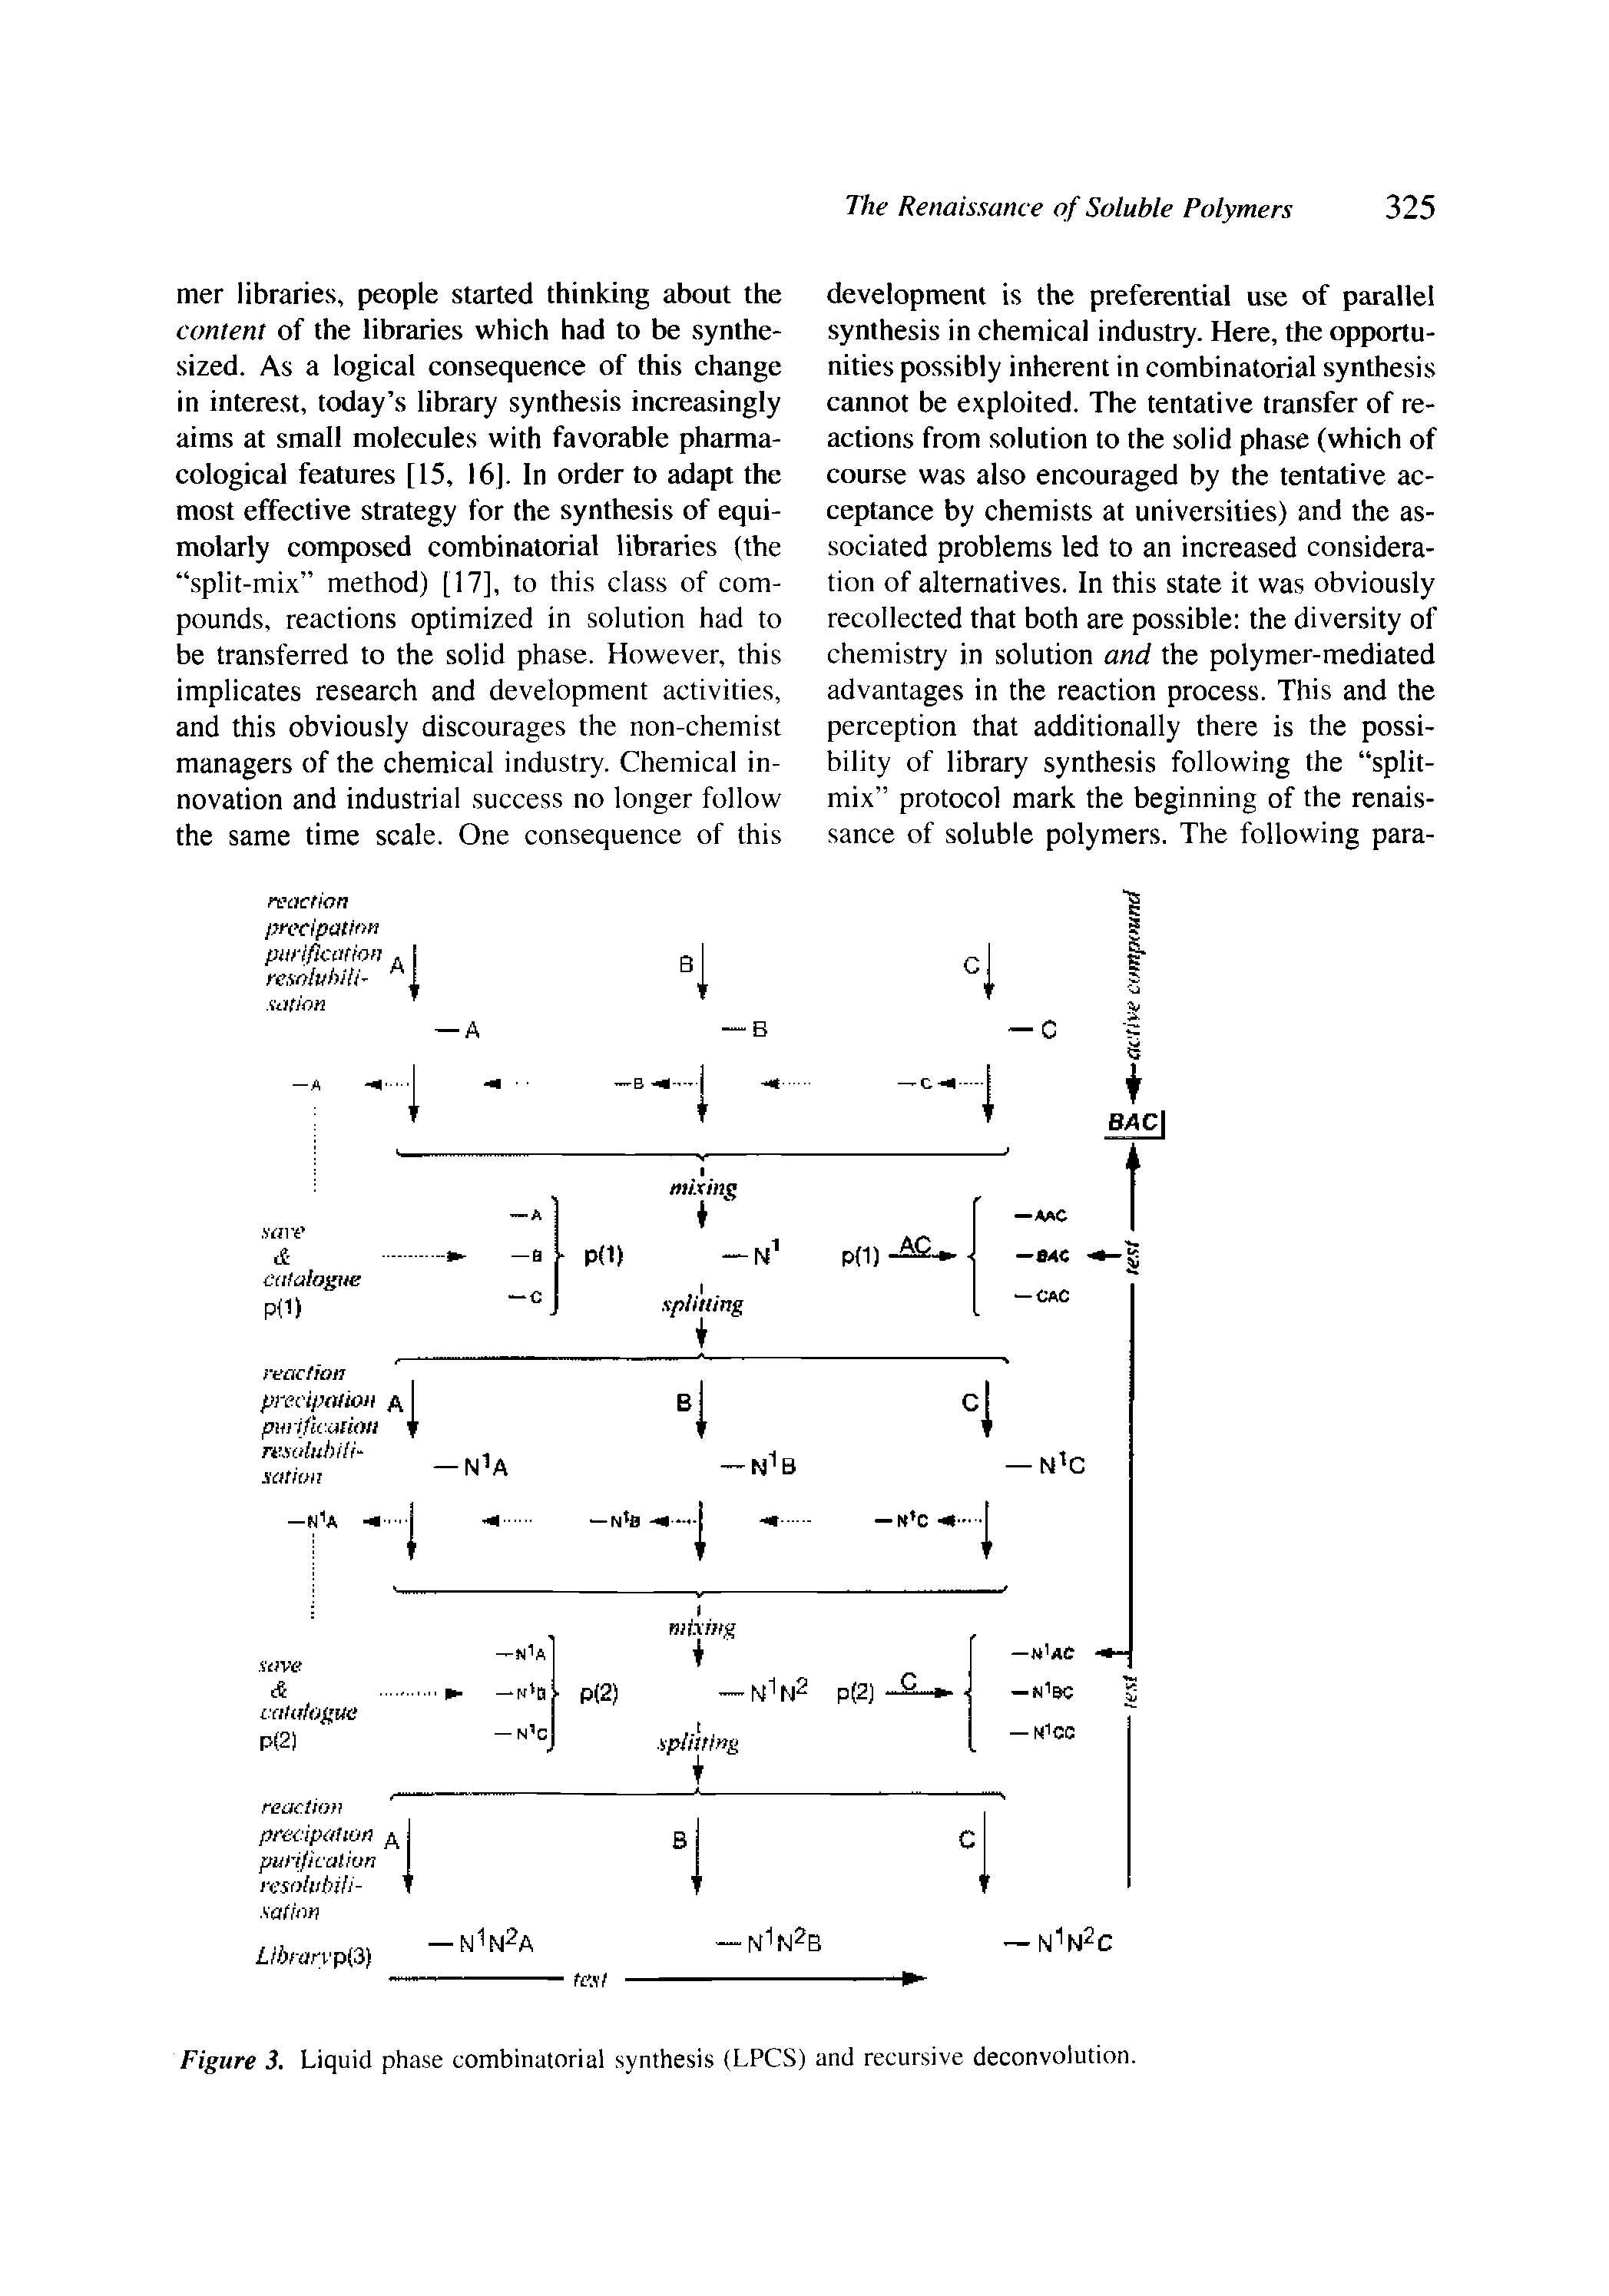 Figure 3. Liquid phase combinatorial synthesis (LPCS) and recursive deconvolution.